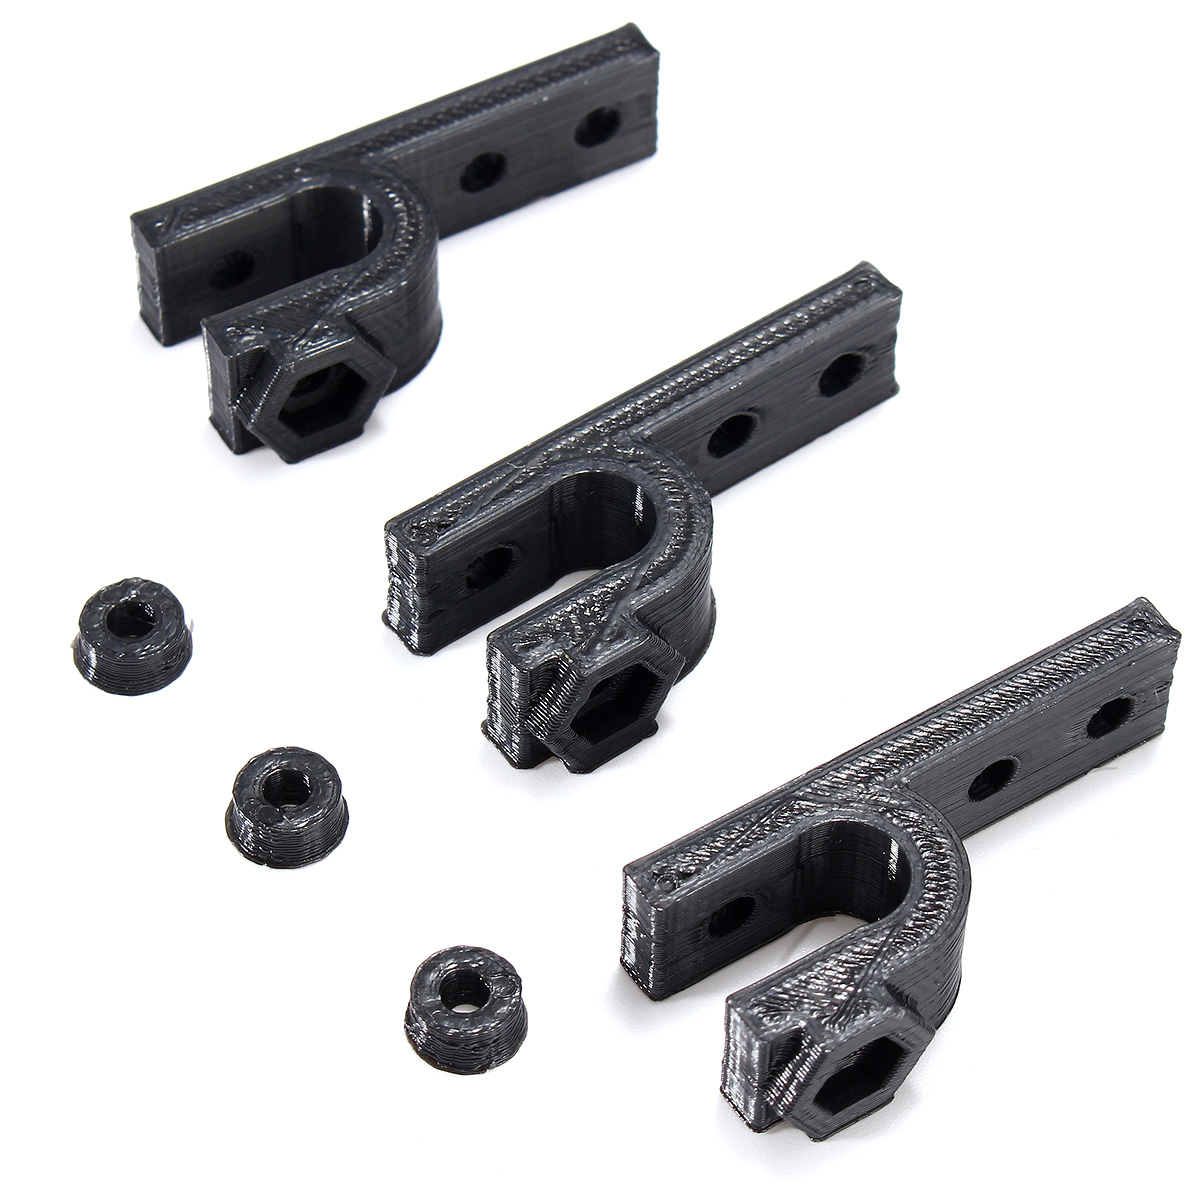 Black-ABS-Filament-Black-3D-Printed-Accessories-Parts-DIY-Kit-For-RepRap-Prusa-i3-3D-Printer-1187085-4